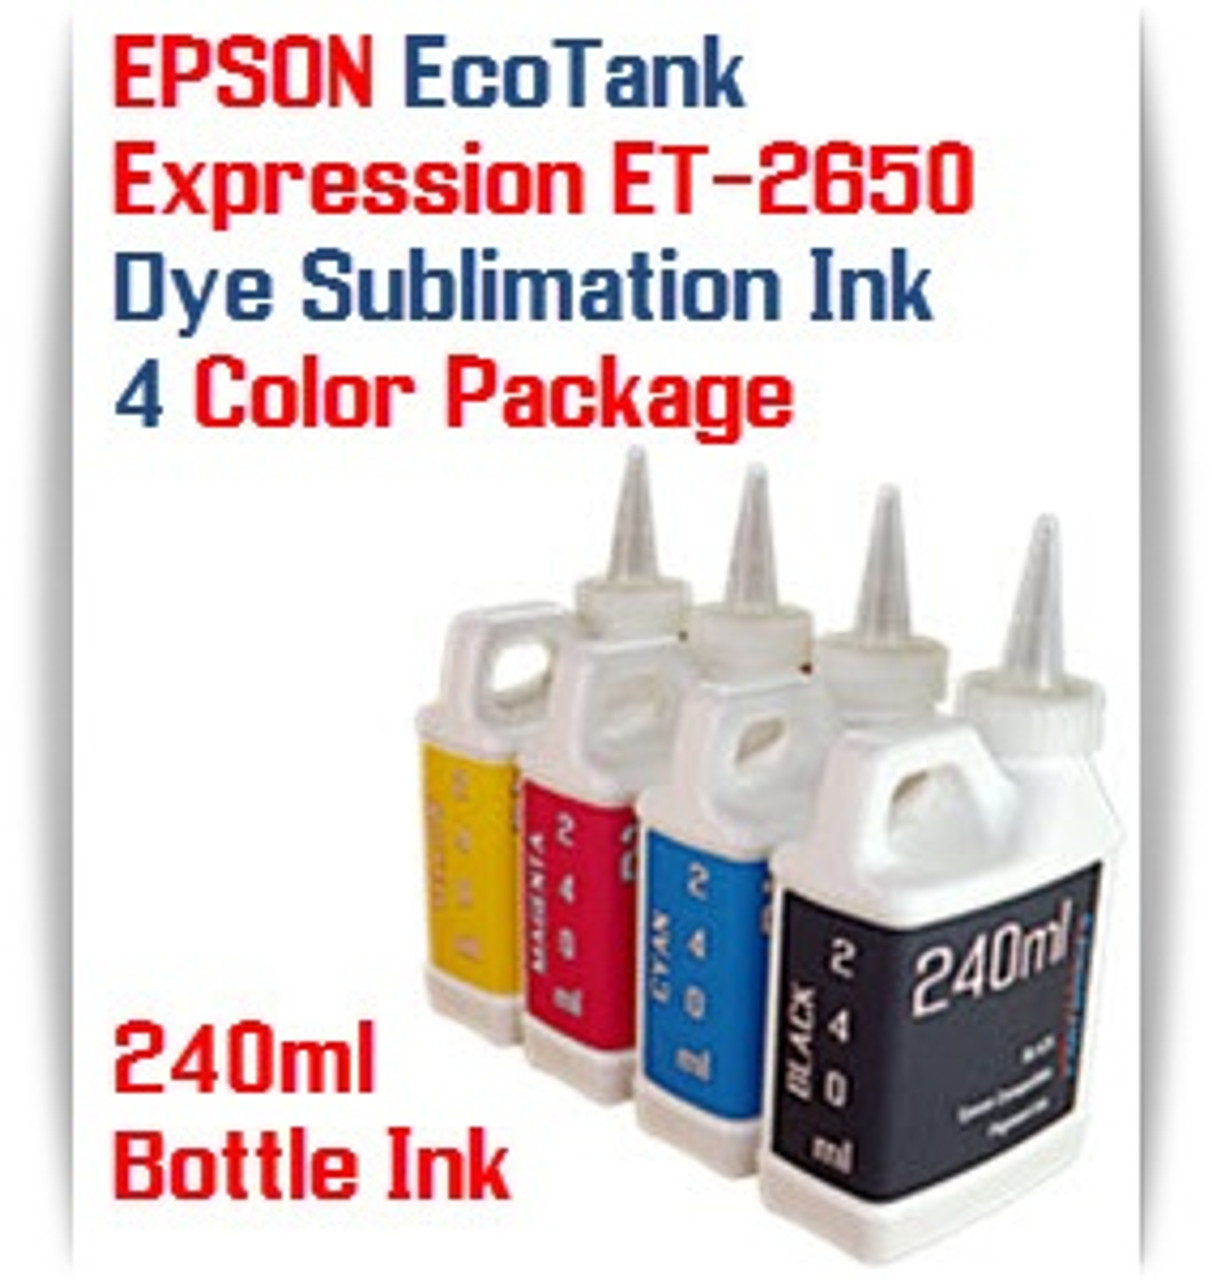 EPSON Expression ET-2650 EcoTank printer 4 Color 240ml Dye Sublimation Bottle Ink